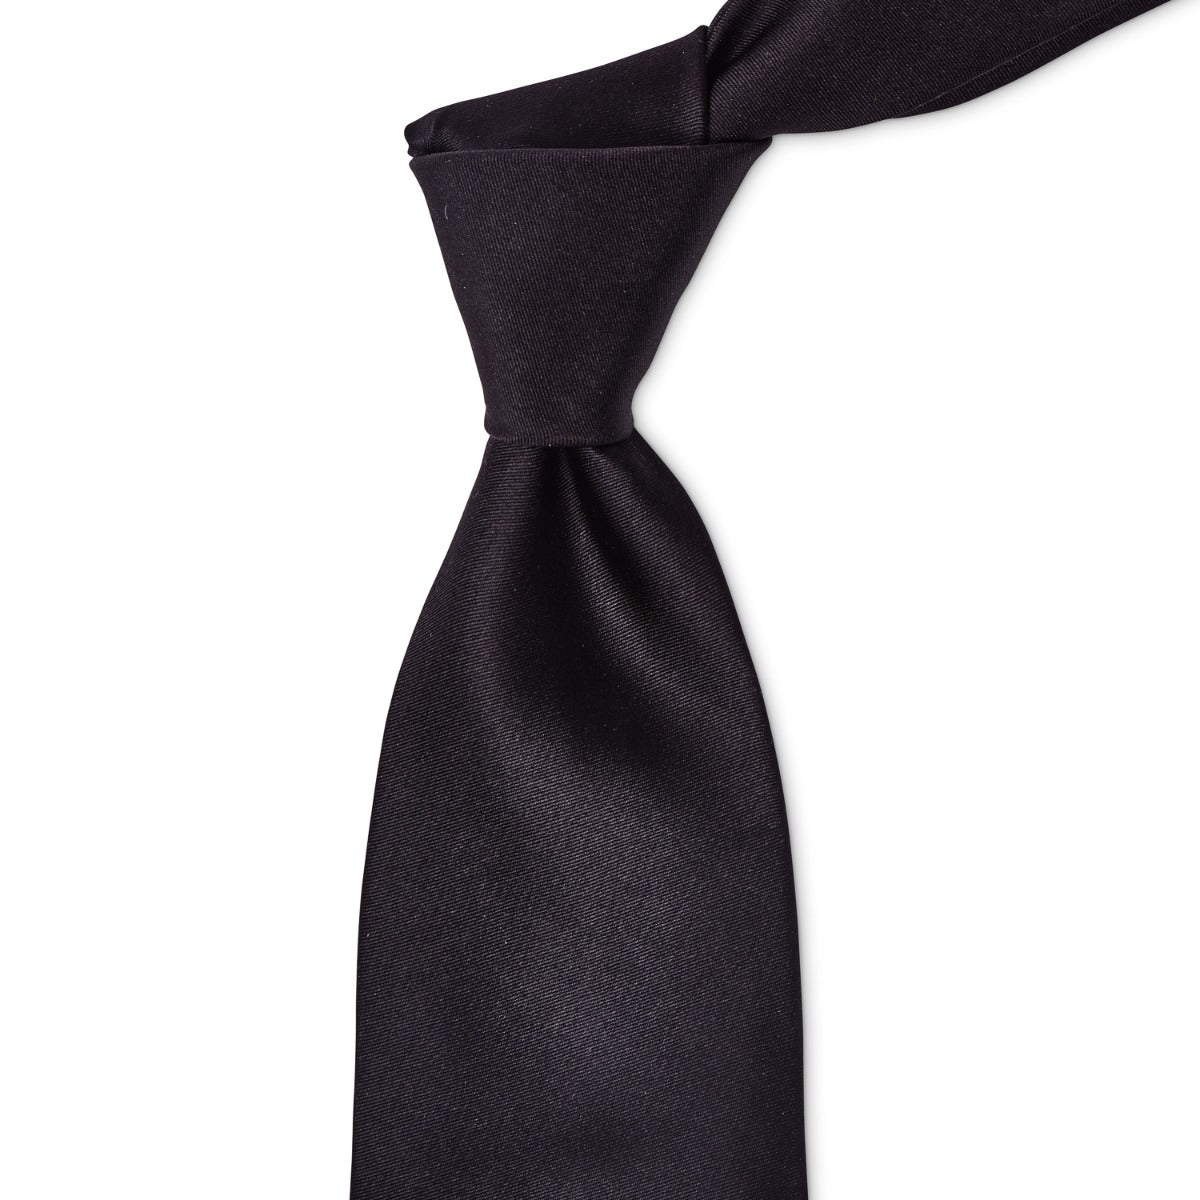 Sovereign Grade Black Solid Satin Tie